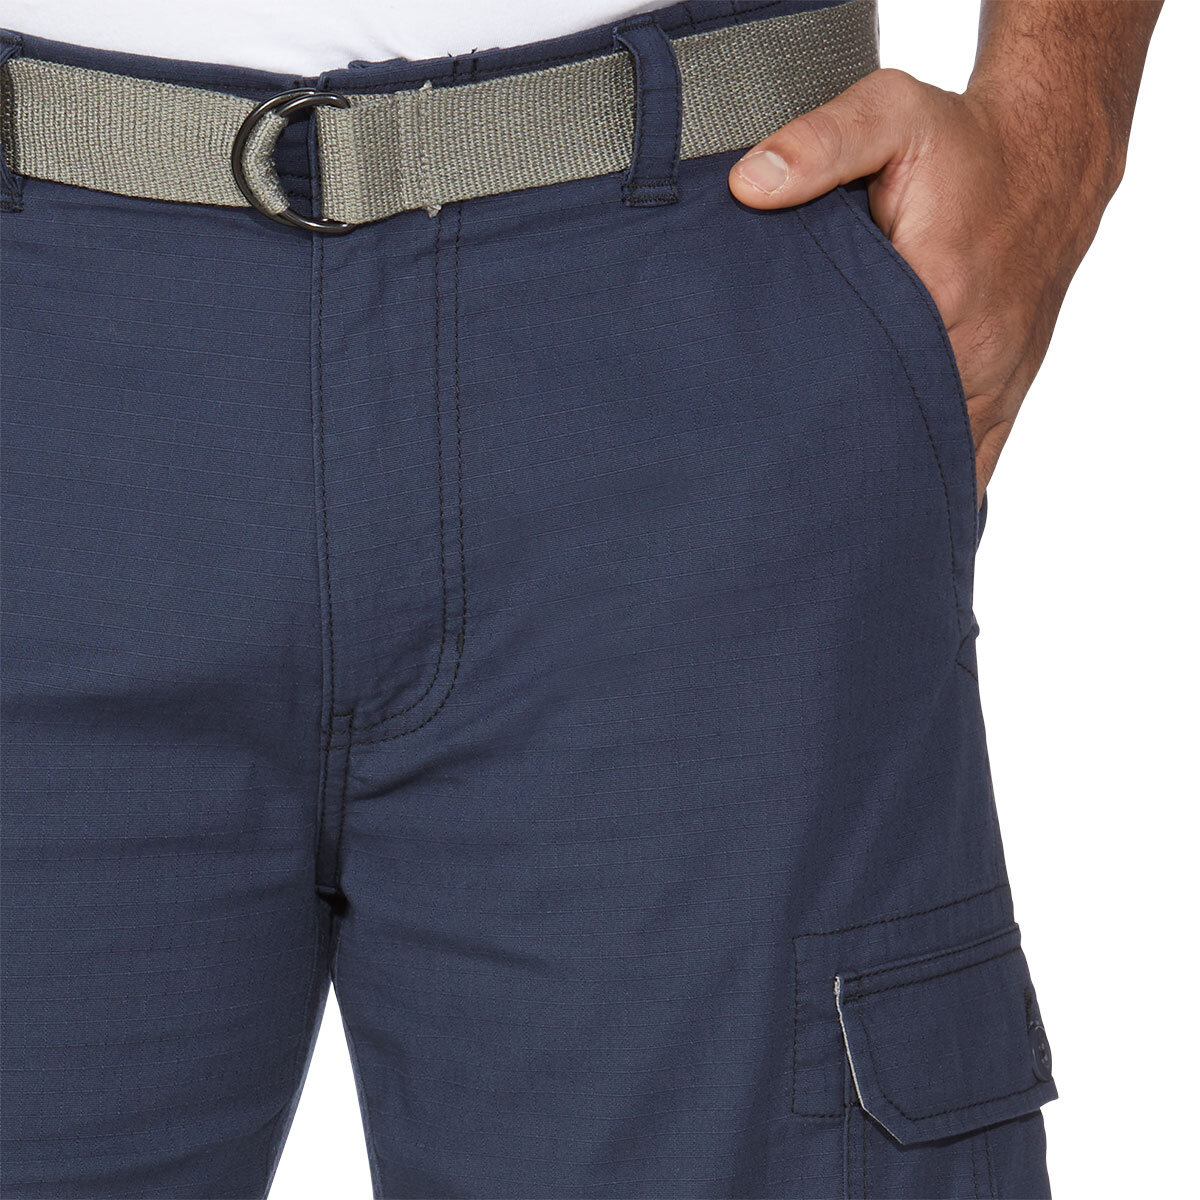 front image of navy shorts belt detail